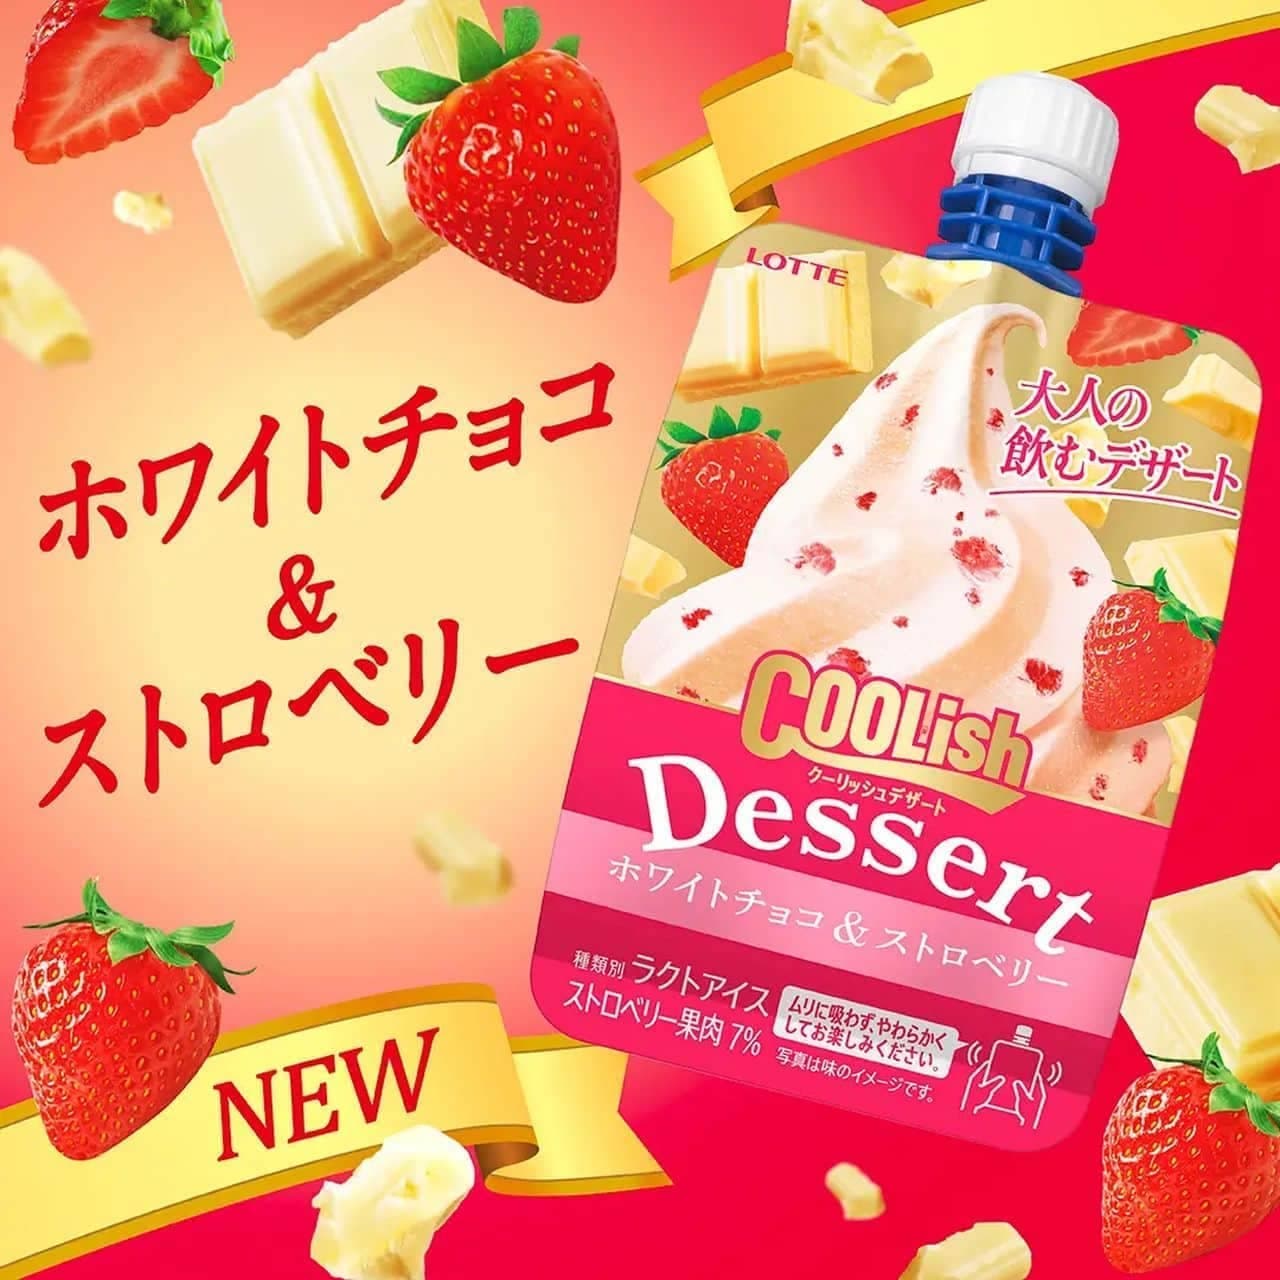 Lotte "Coolish Dessert White Chocolate & Strawberry